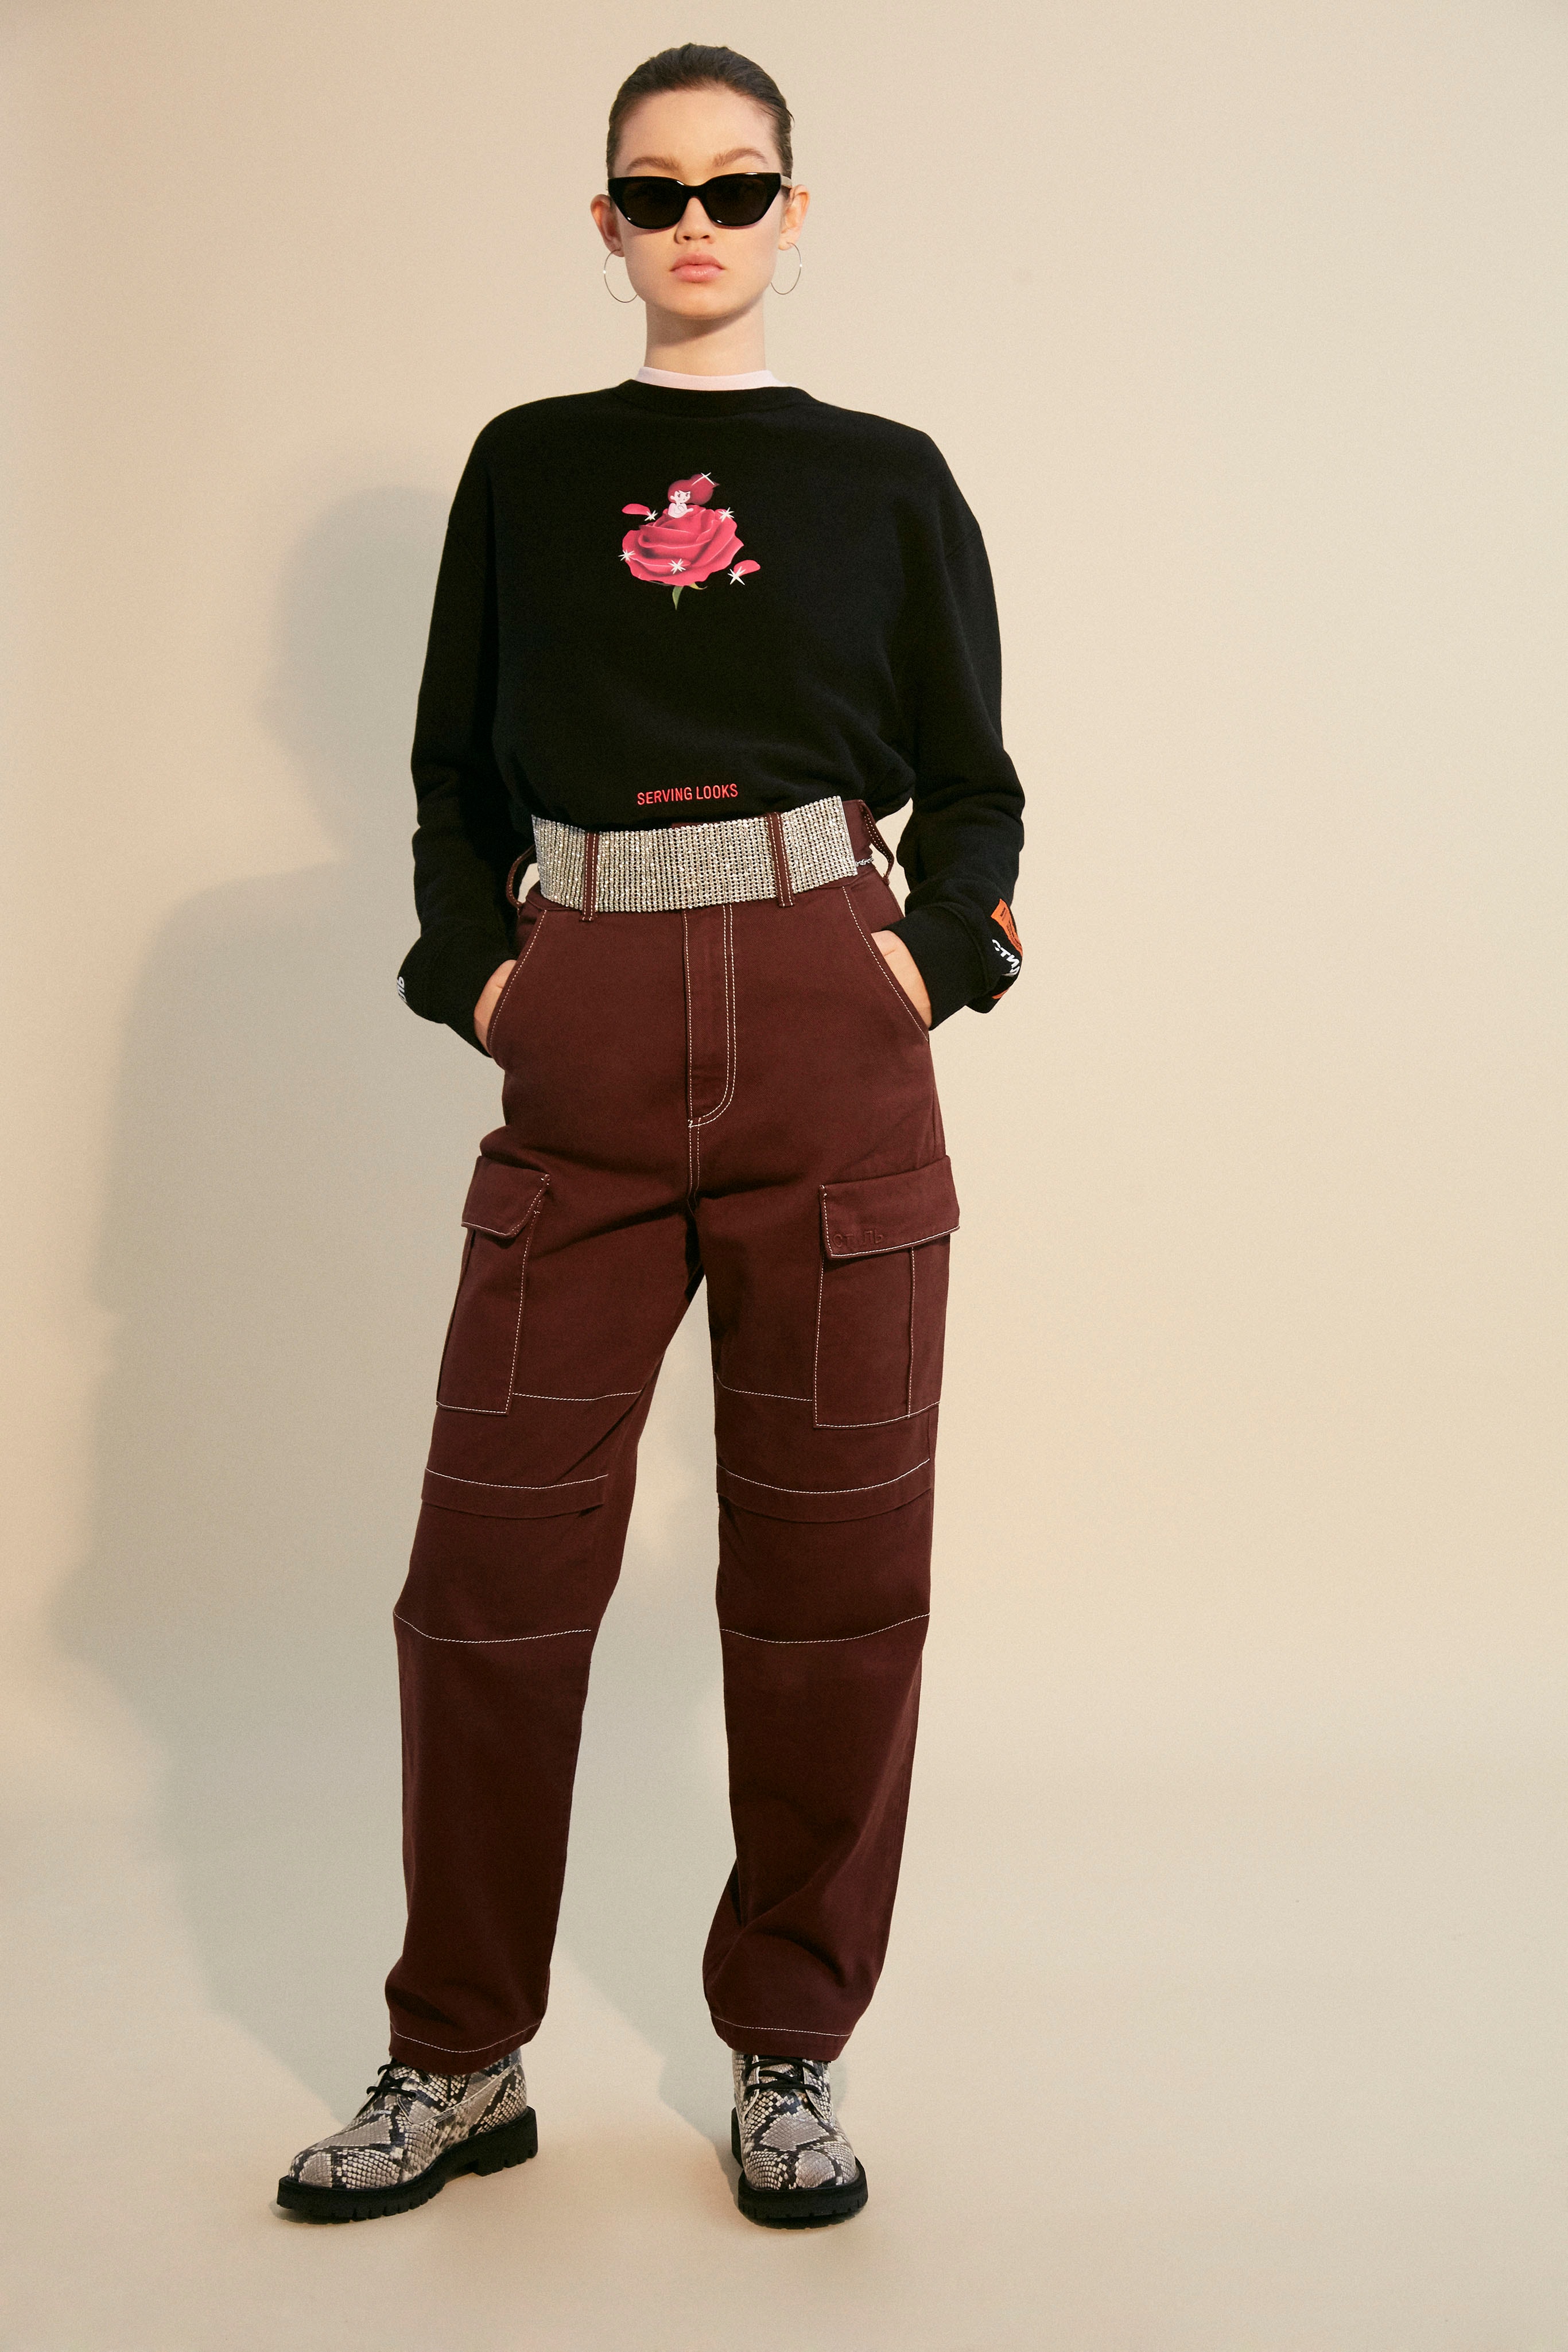 Heron Preston Fall/Winter 2018 Collection Public Figure Streetwear Influencer Culture Street Style Carhartt WIP NASA